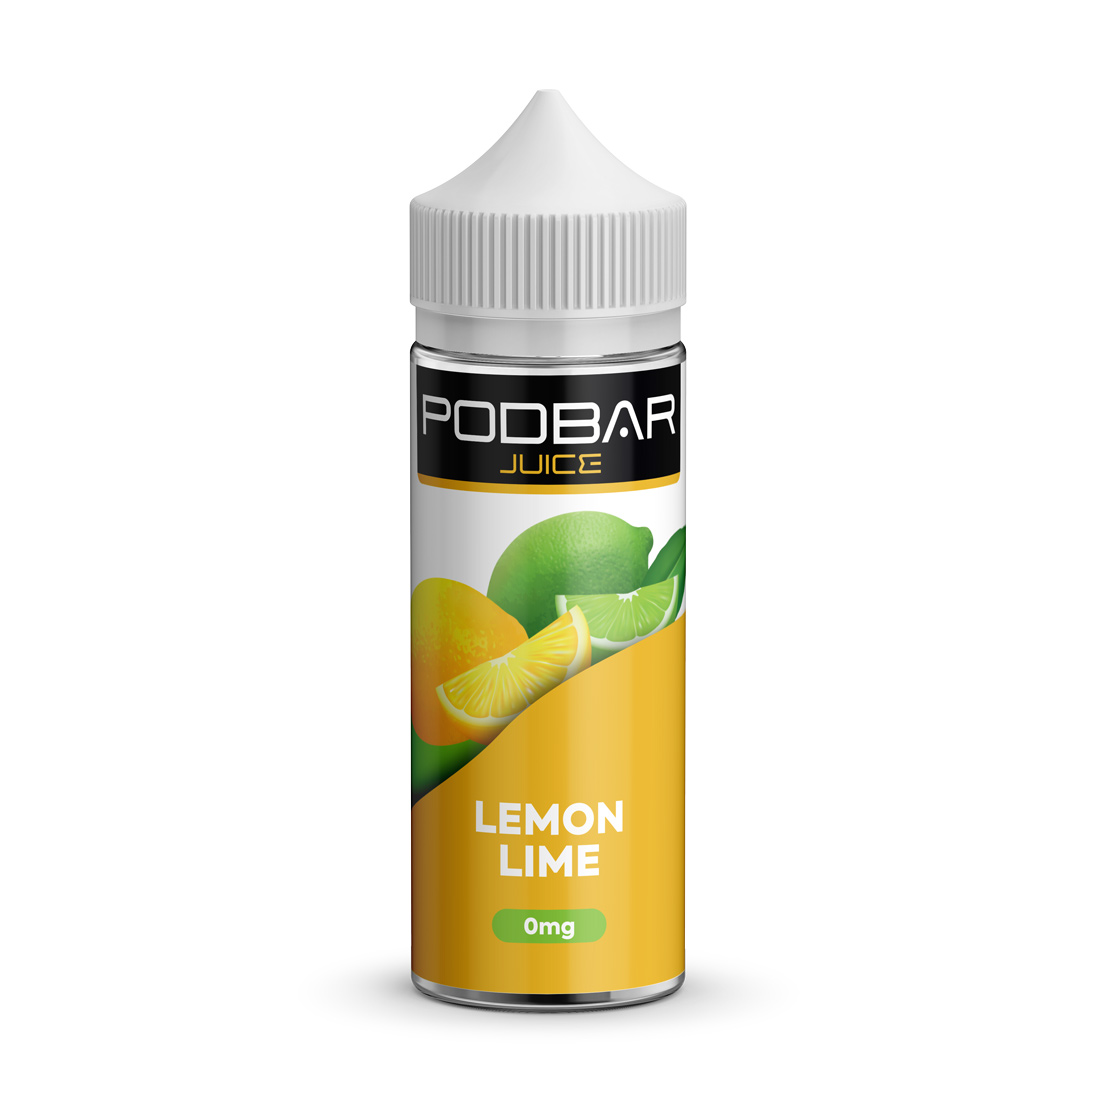 Podbar Juice Lemon Lime